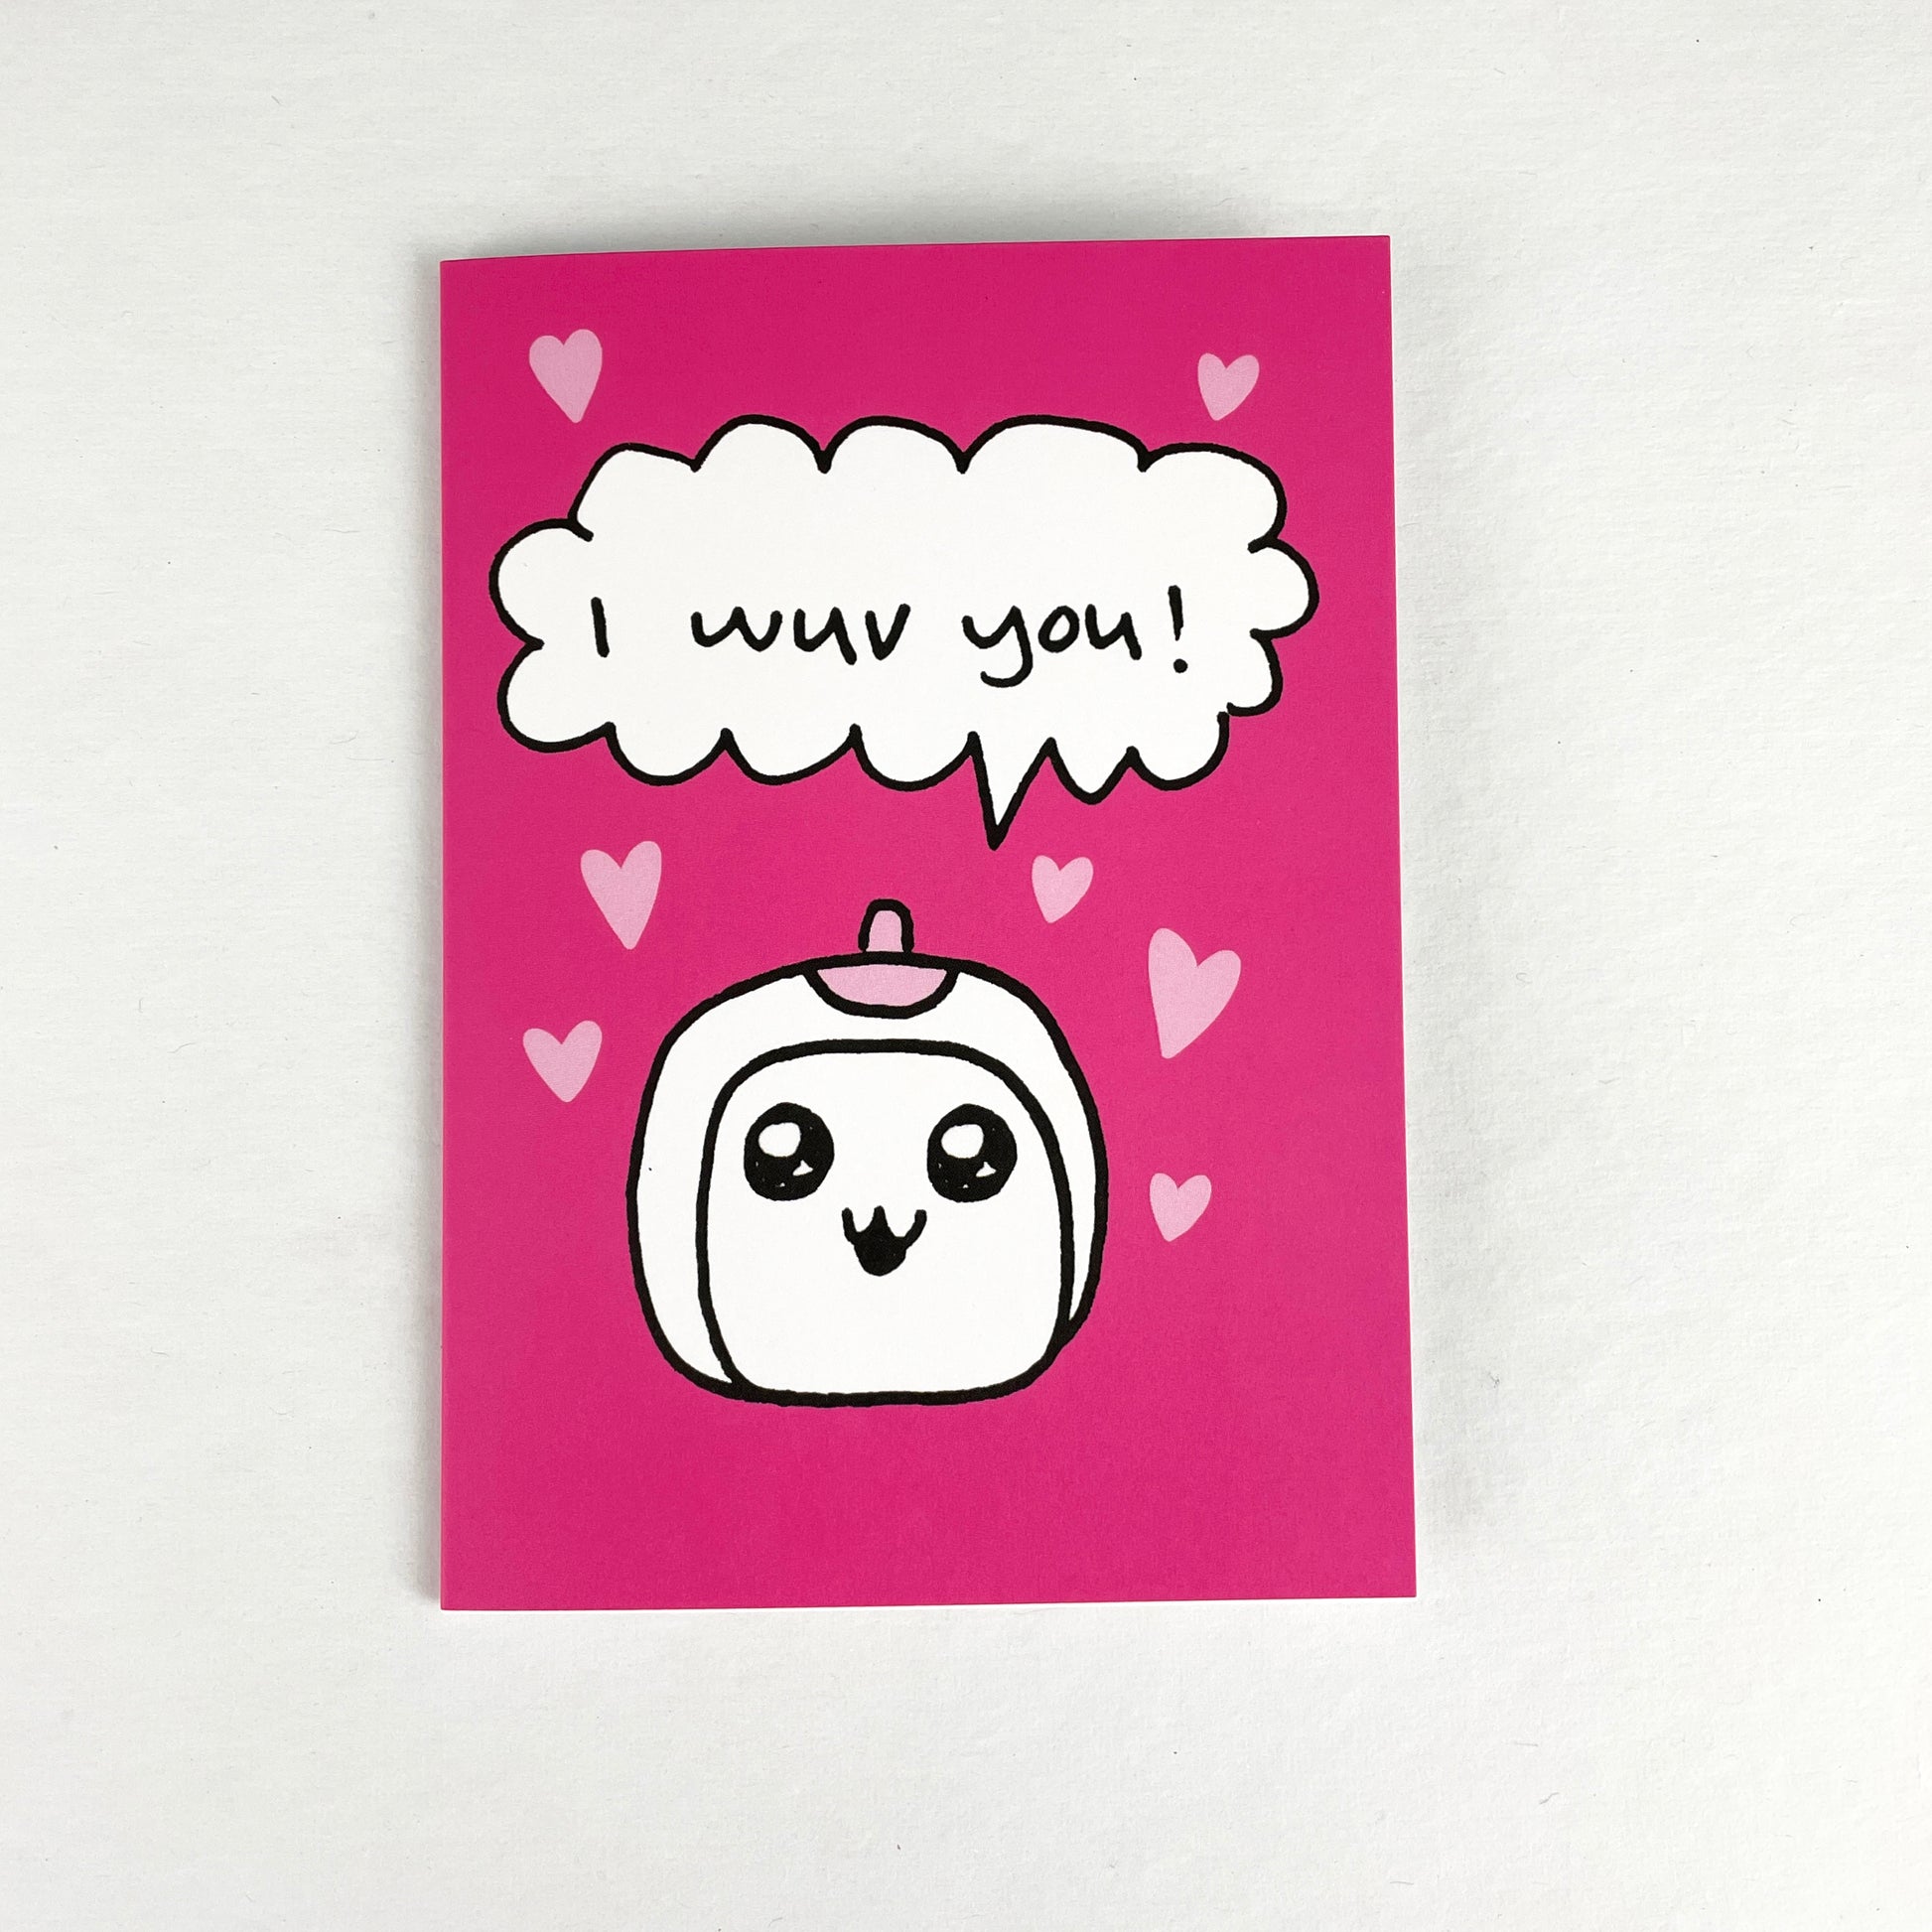 Tofu Baby Greeting Cards by Missy Kulik - "I wuv you!" by Missy Kulik - K. A. Artist Shop